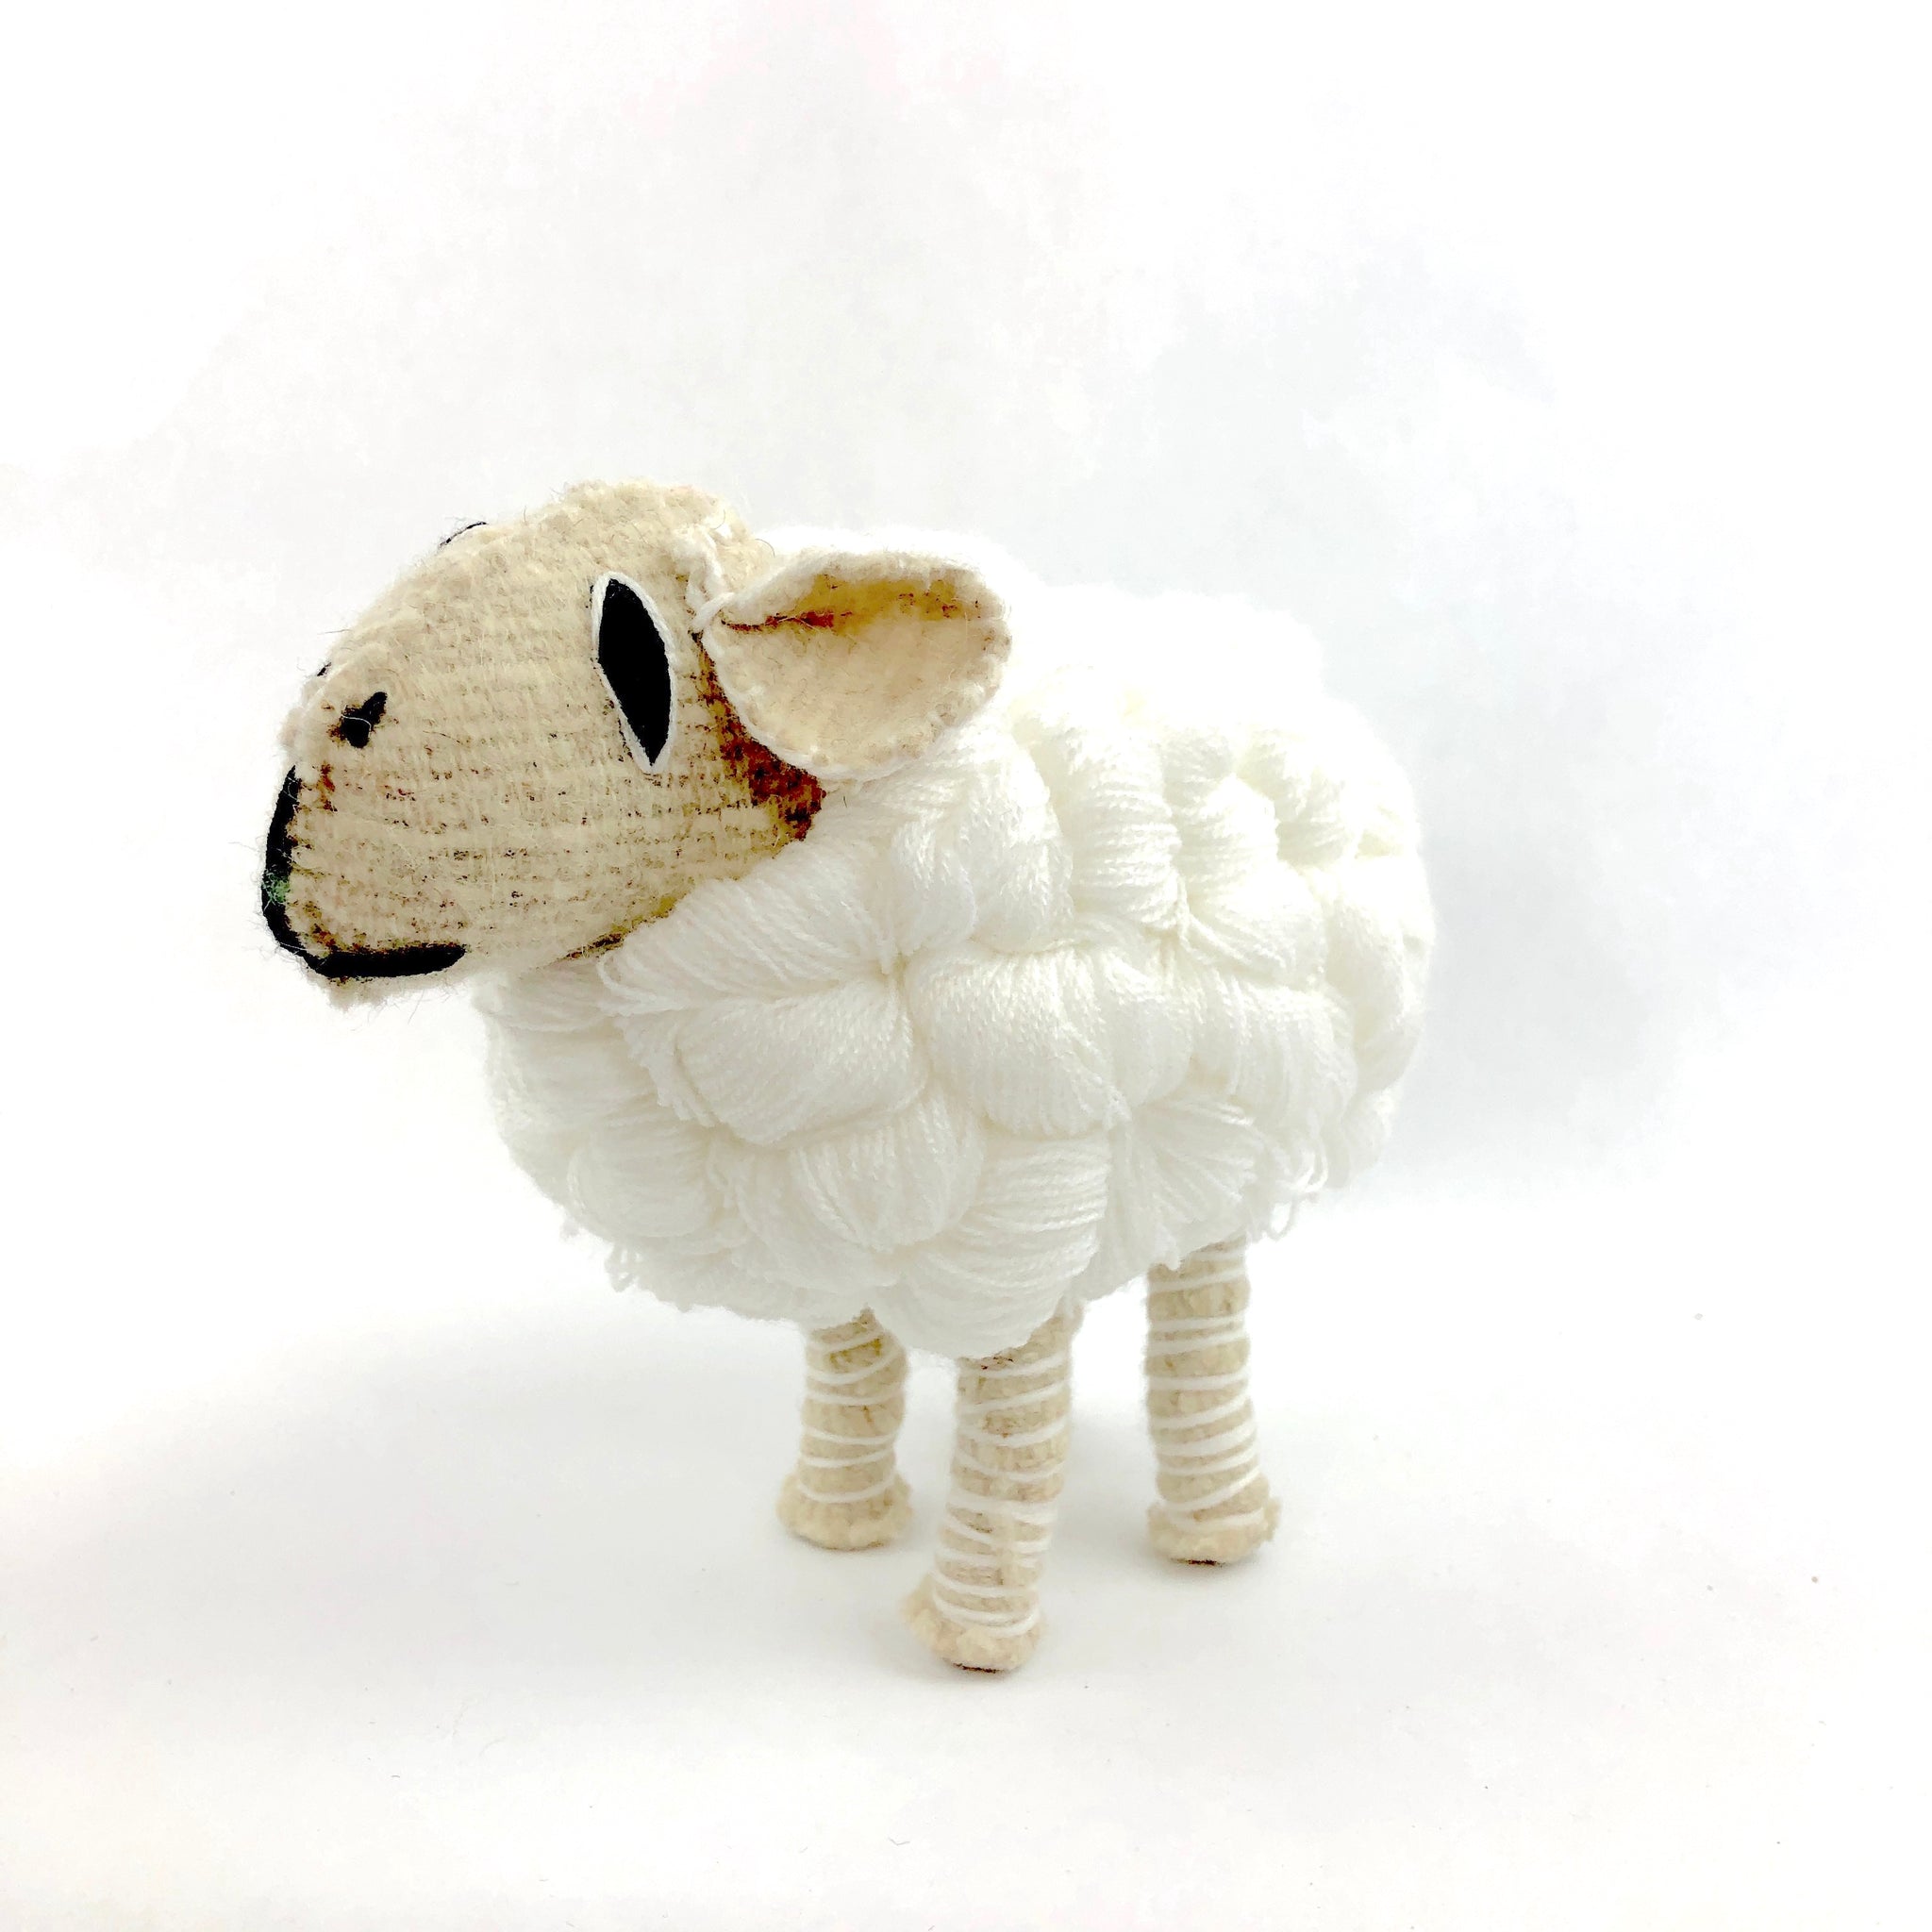 Mexican folk art animal, sheep, fair trade sheep